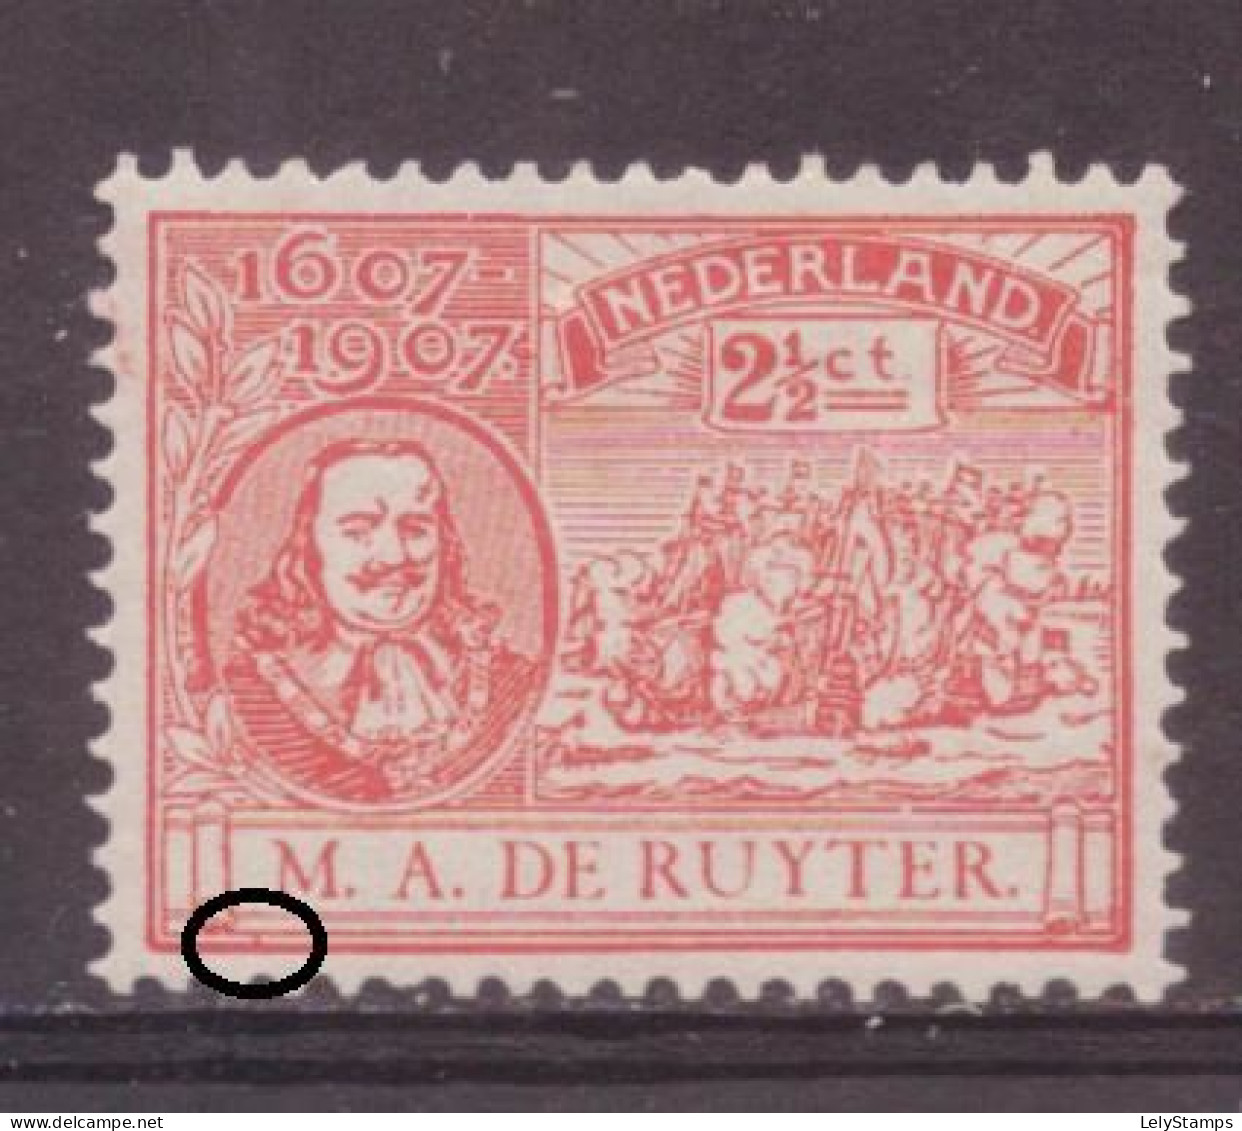 Nederland / Niederlande / Pays Bas NVPH 89 P Plaatfout Plate Error MH * (1907) - Errors & Oddities